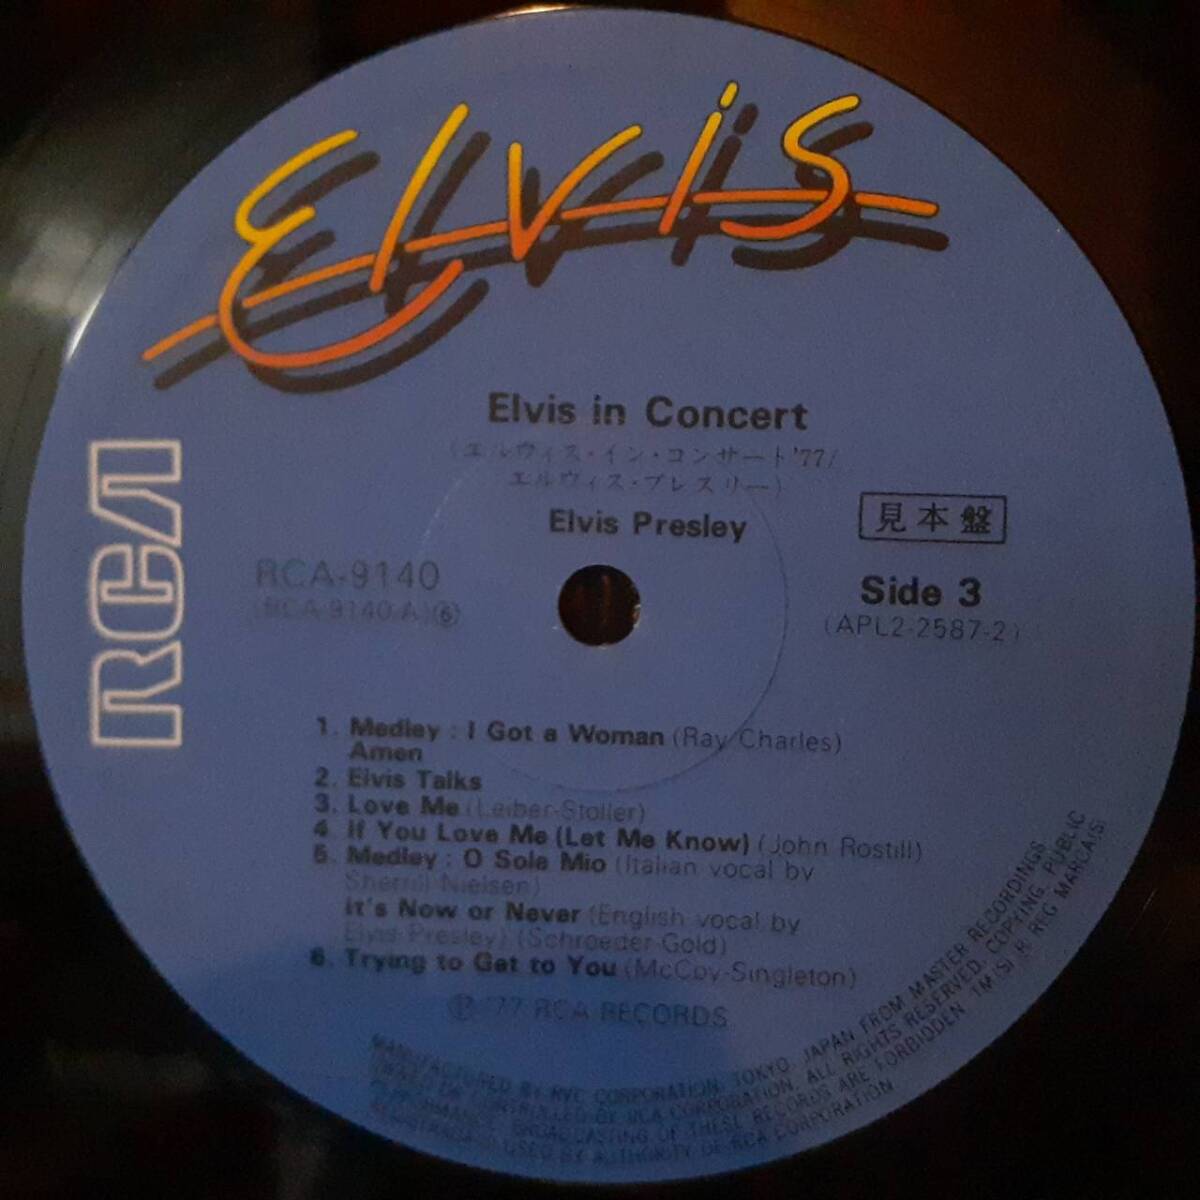 PROMO日本RCA盤2LP帯付き 見本盤 Elvis Presley / Elvis In Concert '77 1977年 RCA-9139~40 エルヴィス・プレスリー イン・コンサート'77_画像8